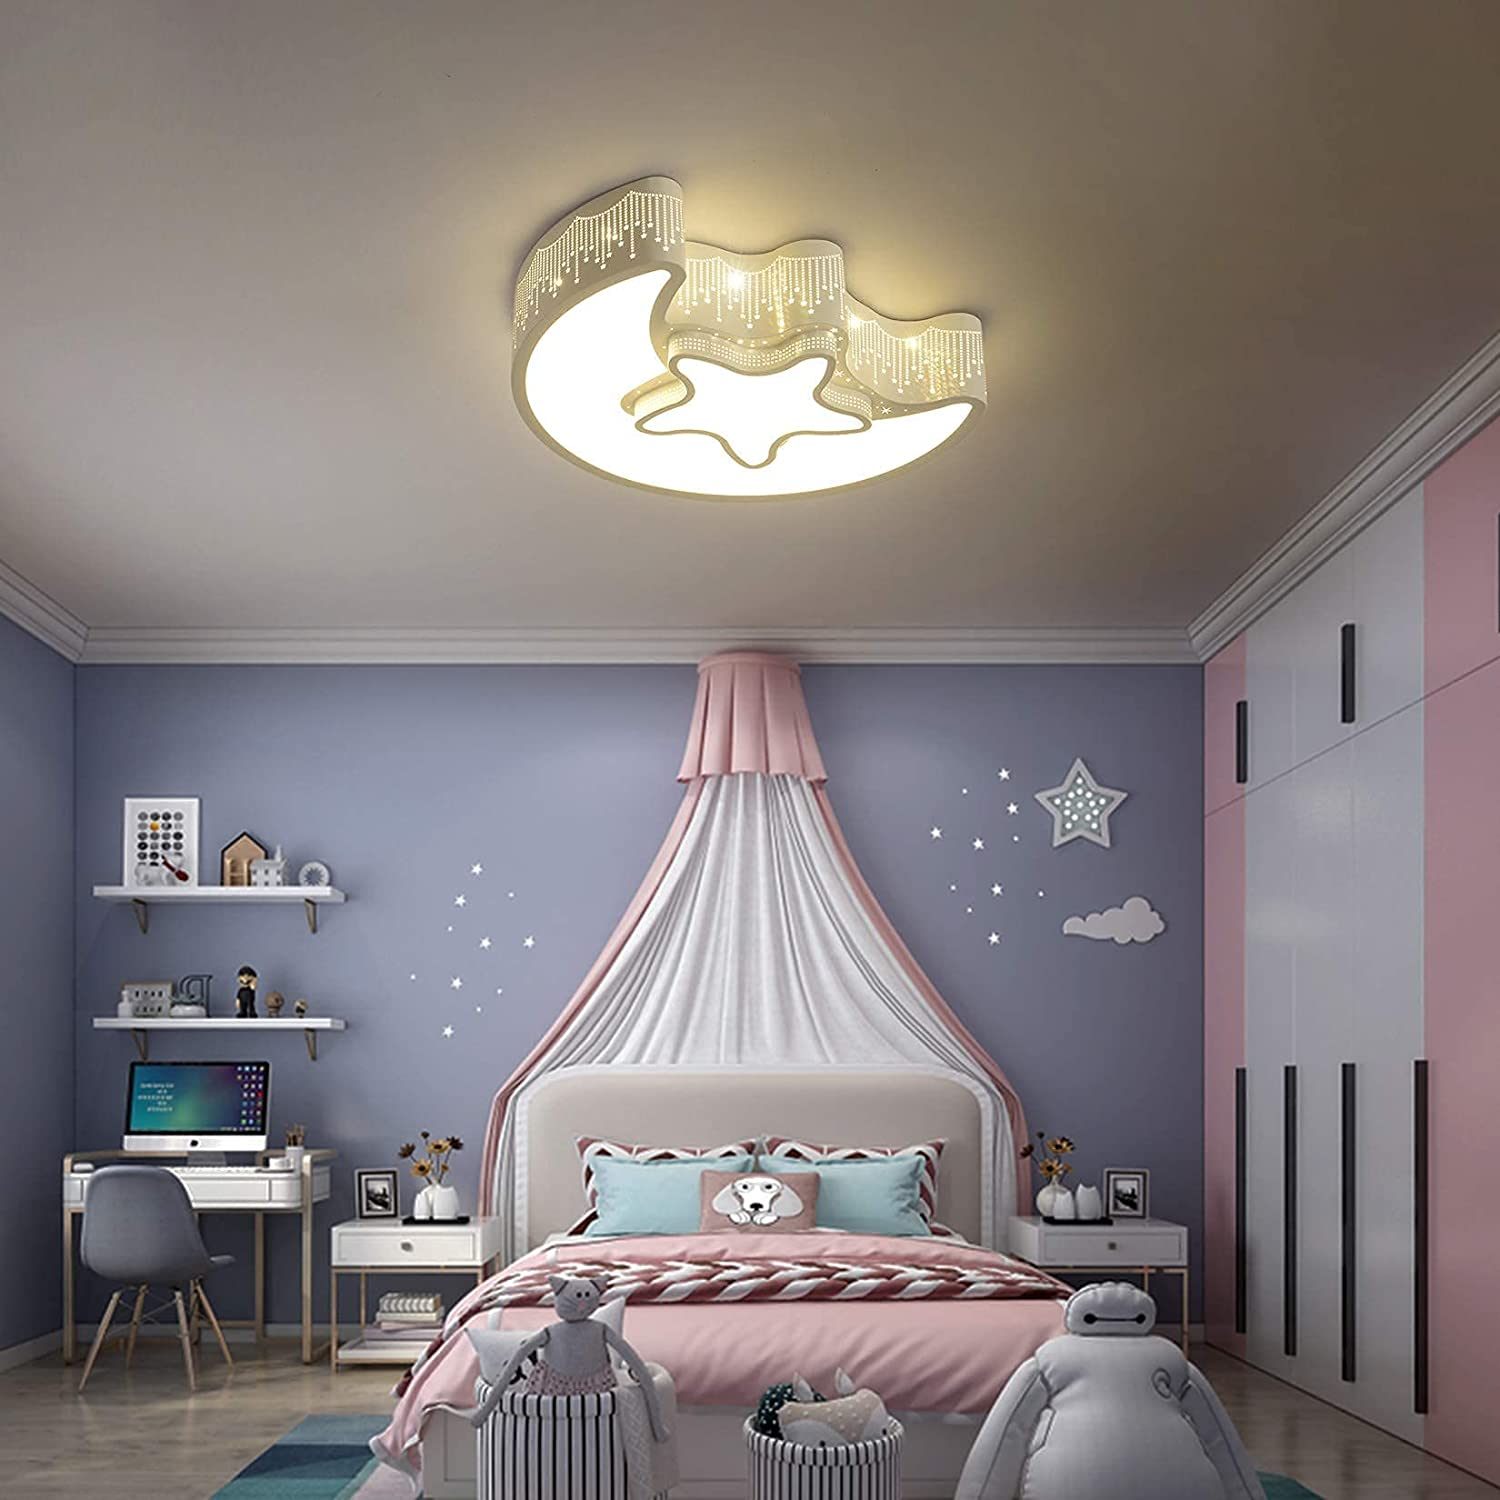 Close to Ceiling Light fixtures Modern Girl’s Bedroom Ceiling Light Metal Chandeliers Moon Star Shape Lighting for Bedroom Kids Room